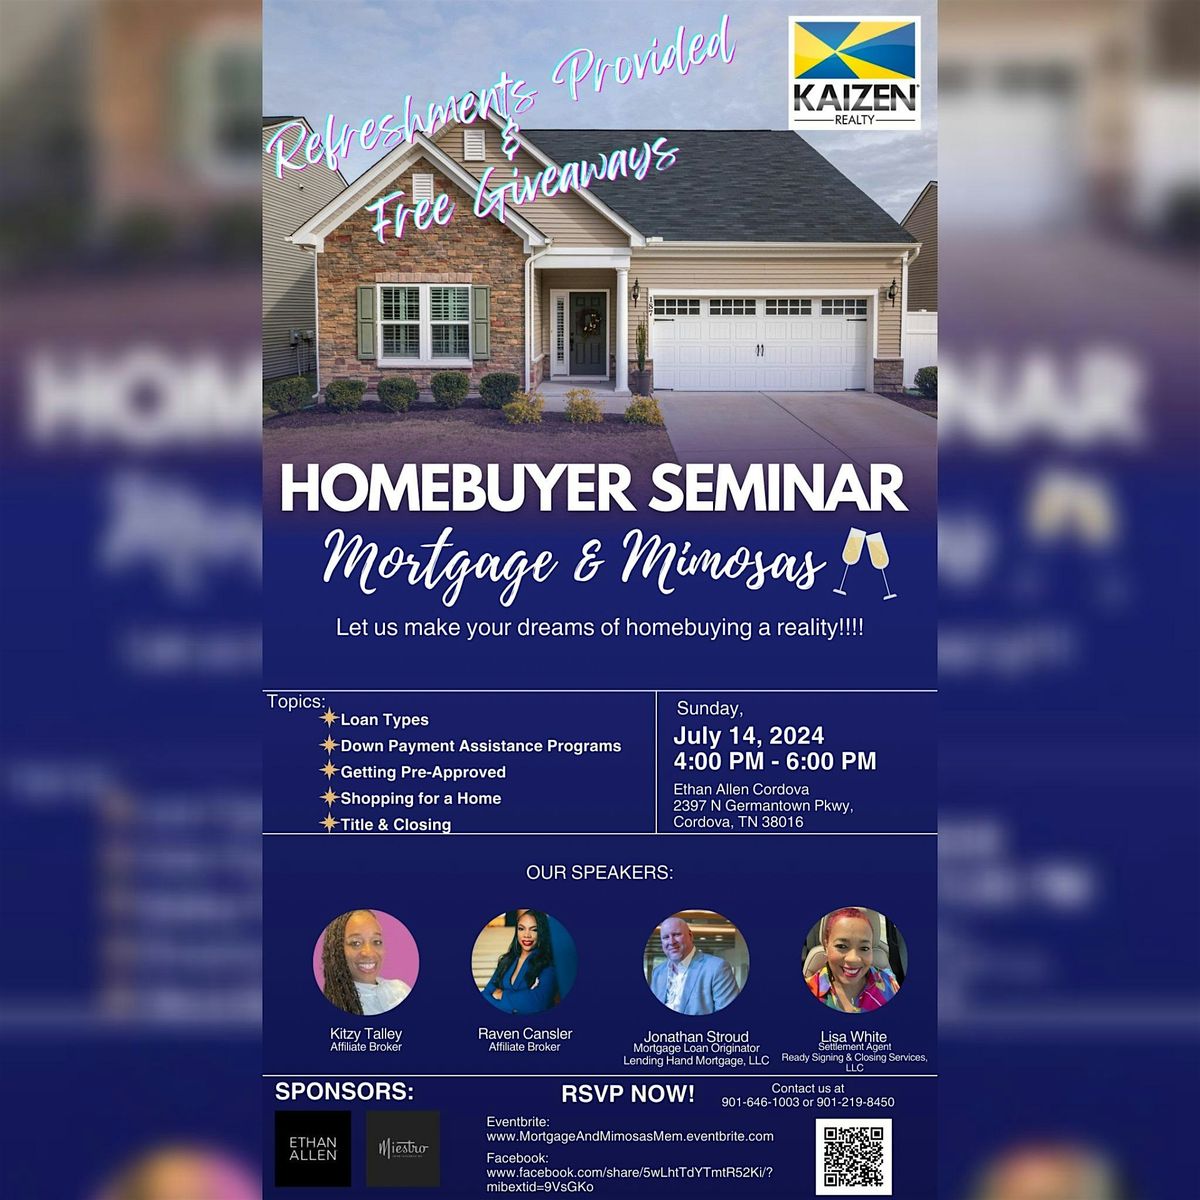 Homebuyer Seminar: Mortgage & Mimosas